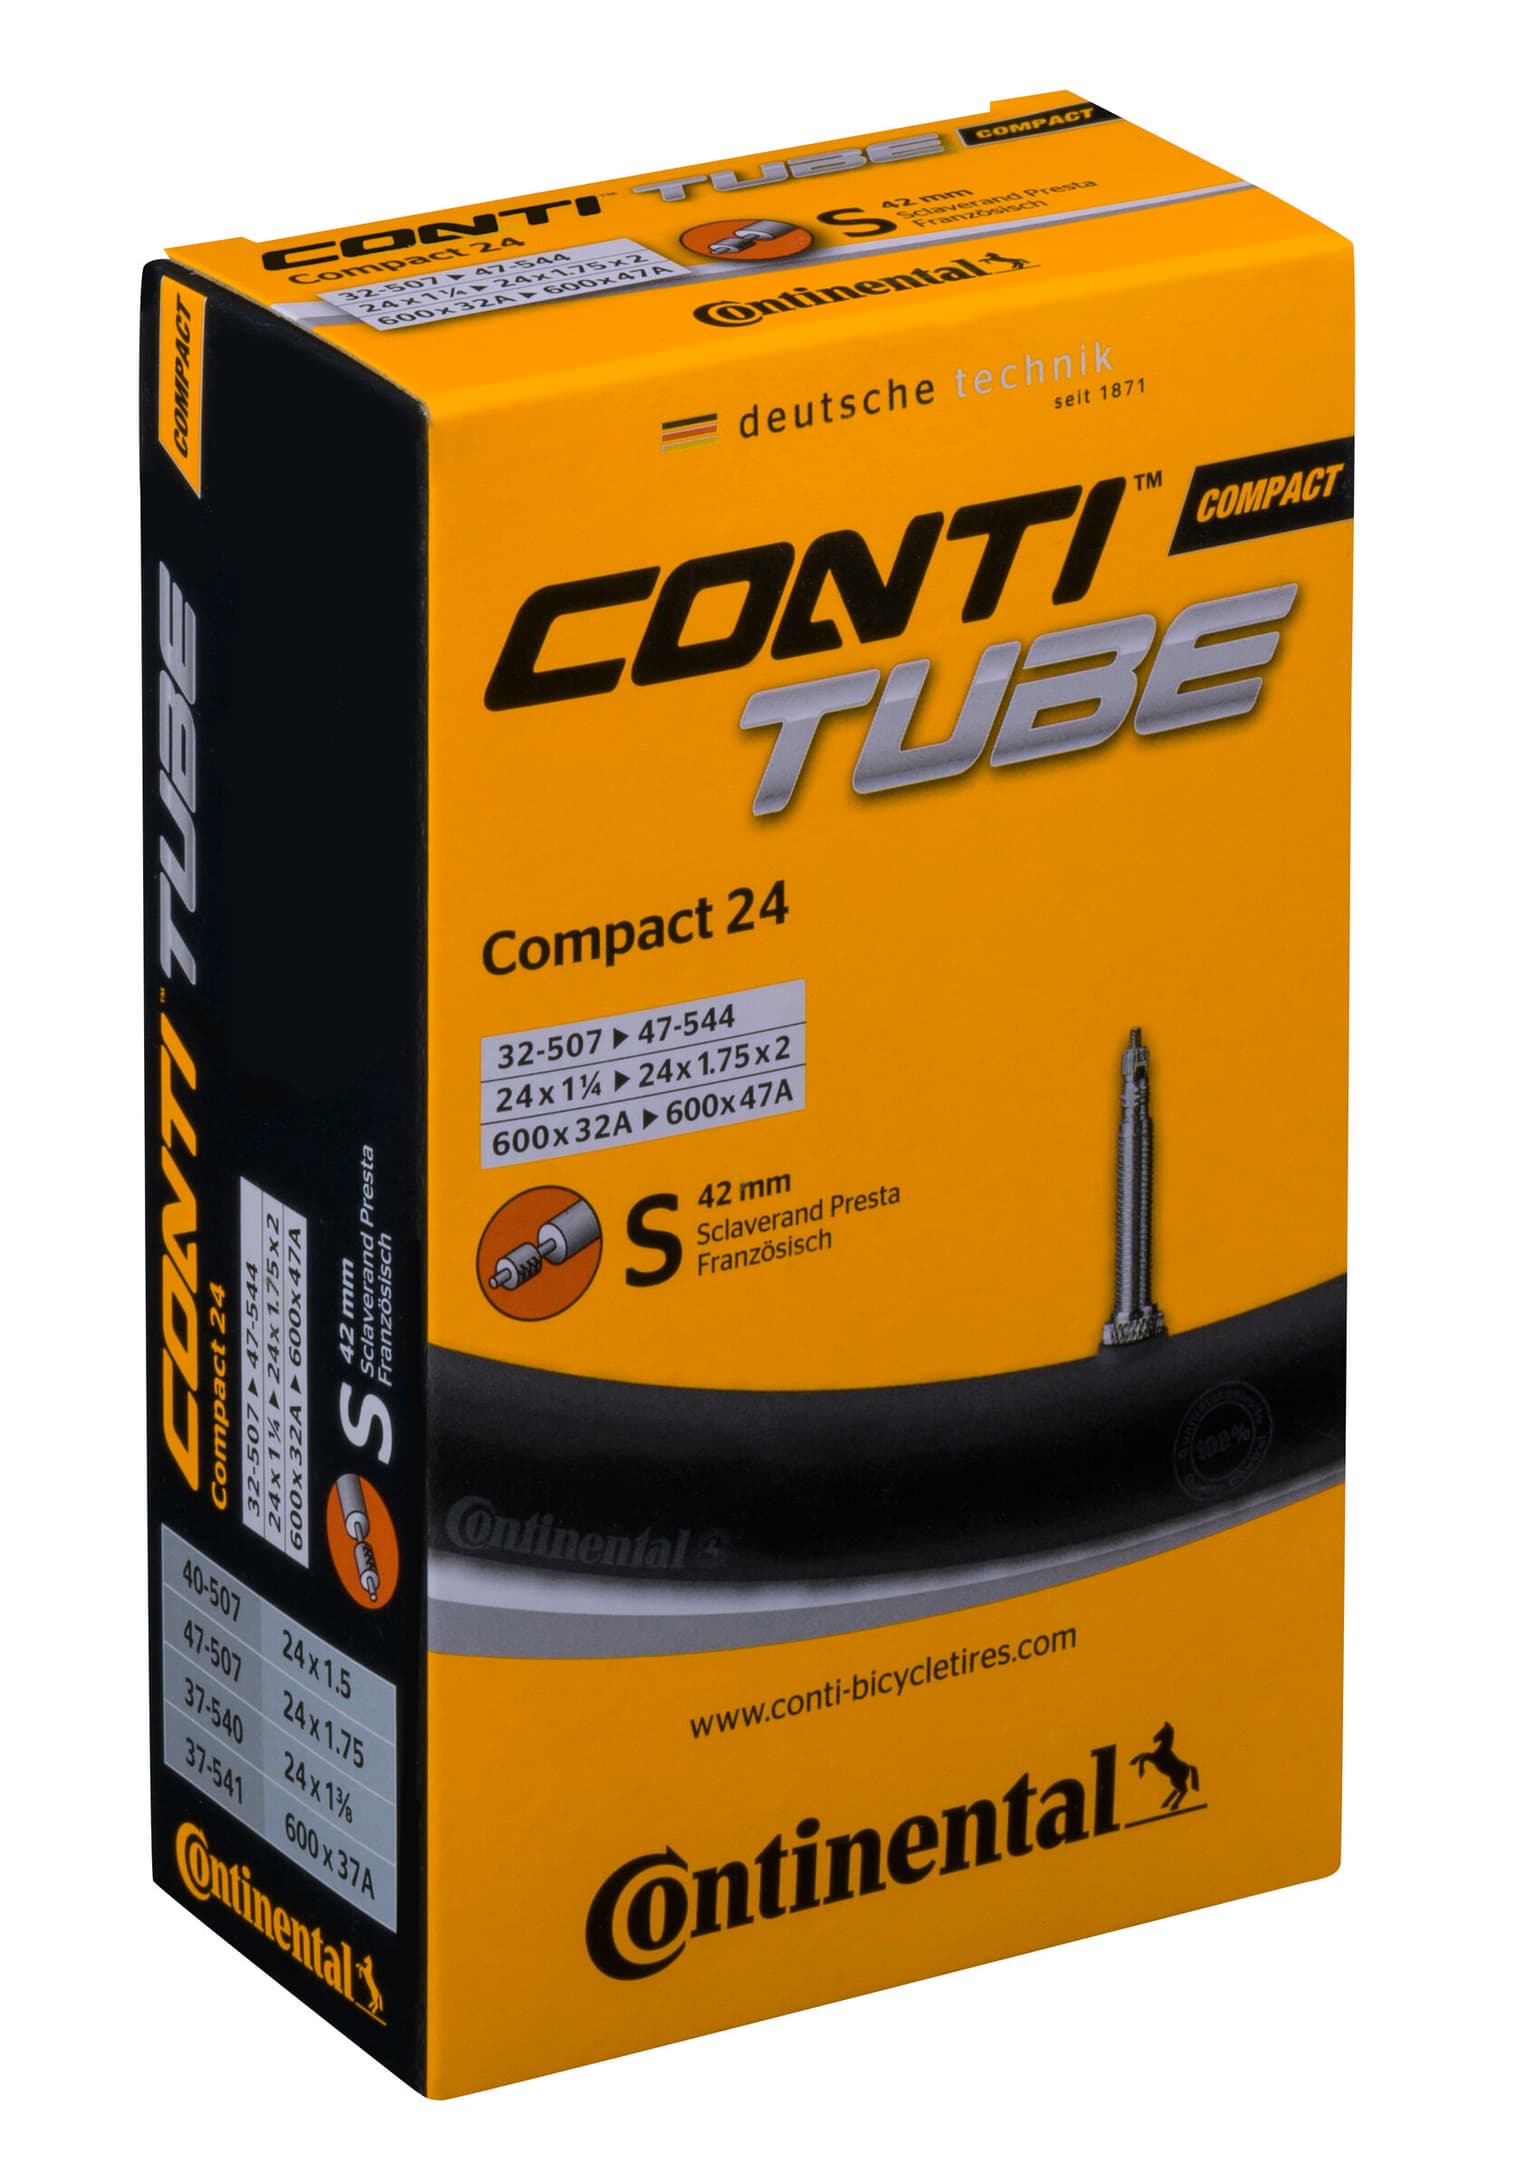 Continental Continental Tour 26 SV Camera d'aria per bicicletta 1